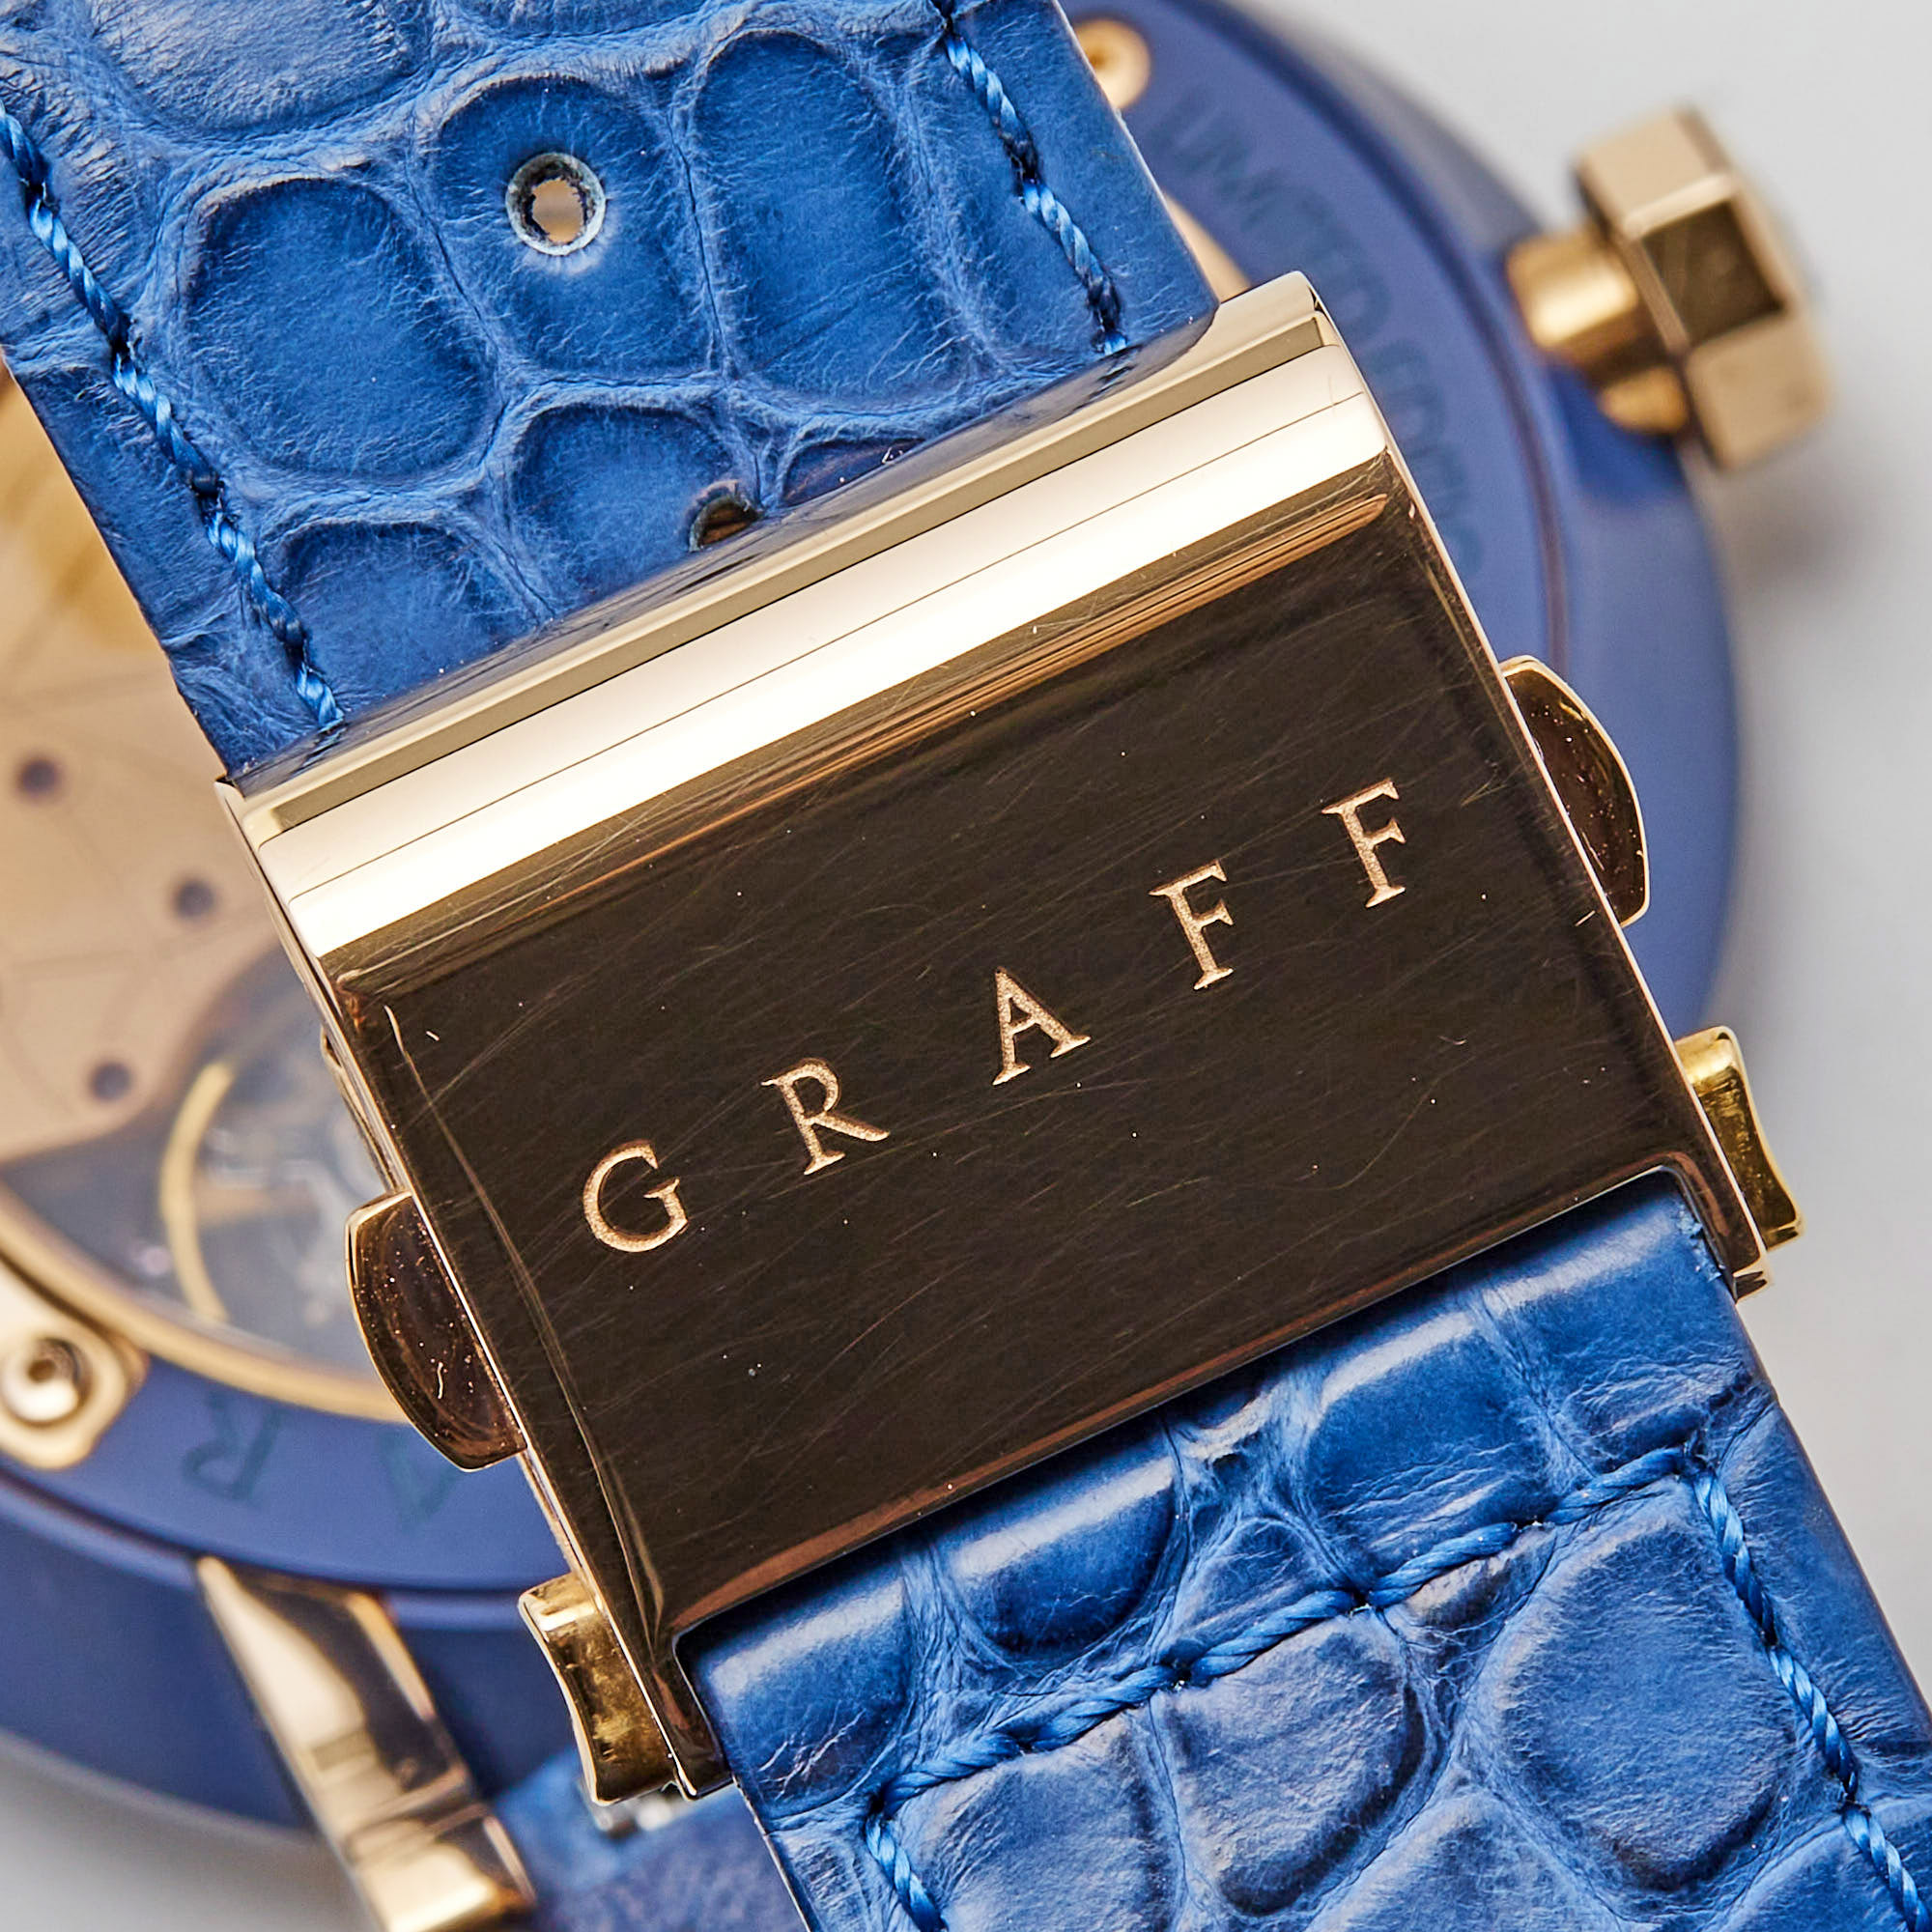 Graff Blue Resin 18K Rose Gold Diamond Alligator Leather Star Grande Date Limited Edition GS45DB.PG.W Men's Wristwatch 45 Mm